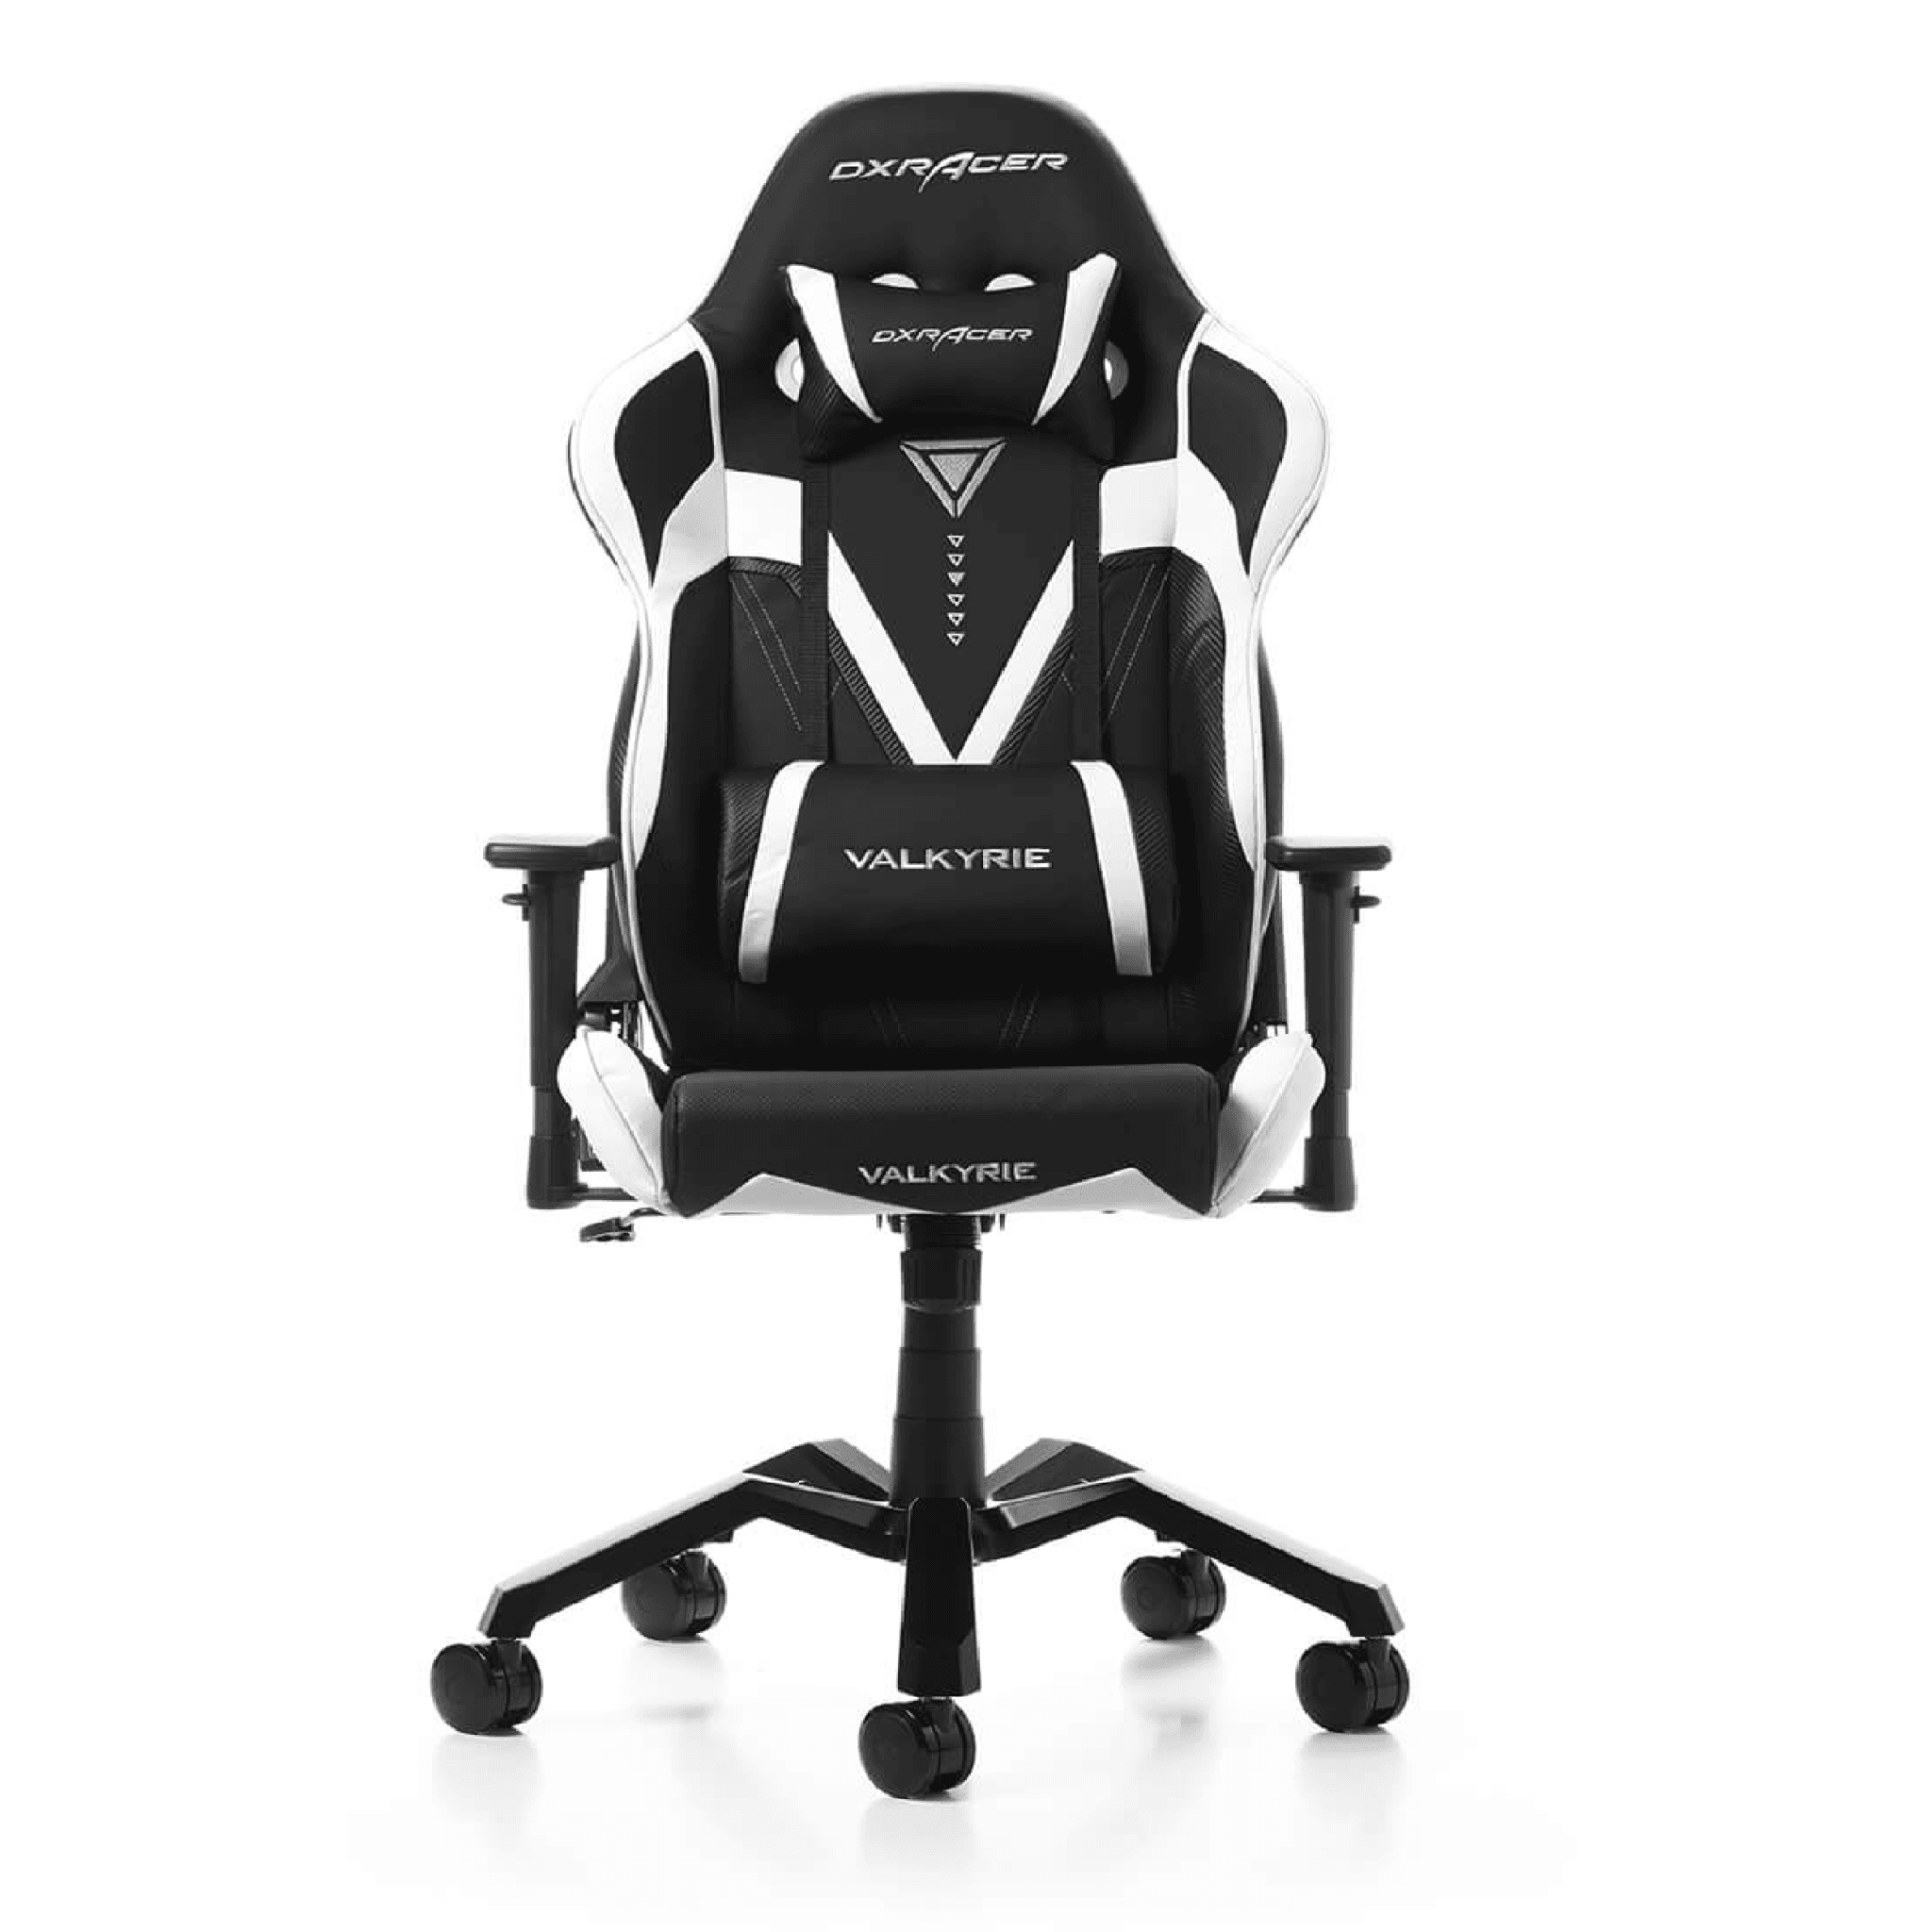 DXRacer Valkyrie Series Gaming Chair - Black/White - Store 974 | ستور ٩٧٤